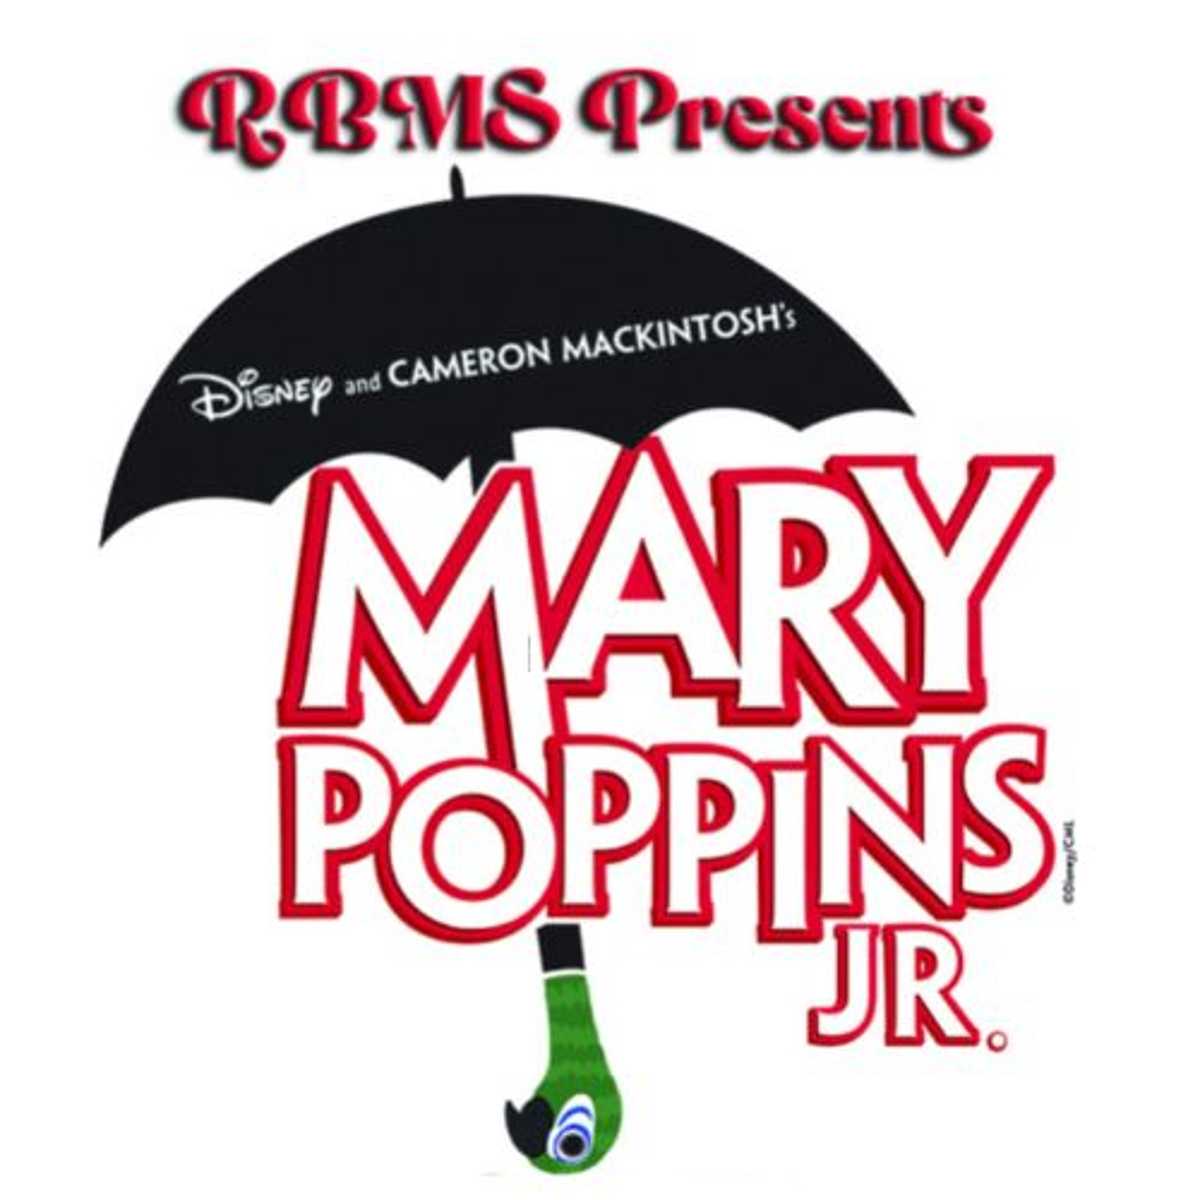 Bernotas Middle School presents Disney & Cameron Mackintosh's Mary Poppins Jr.